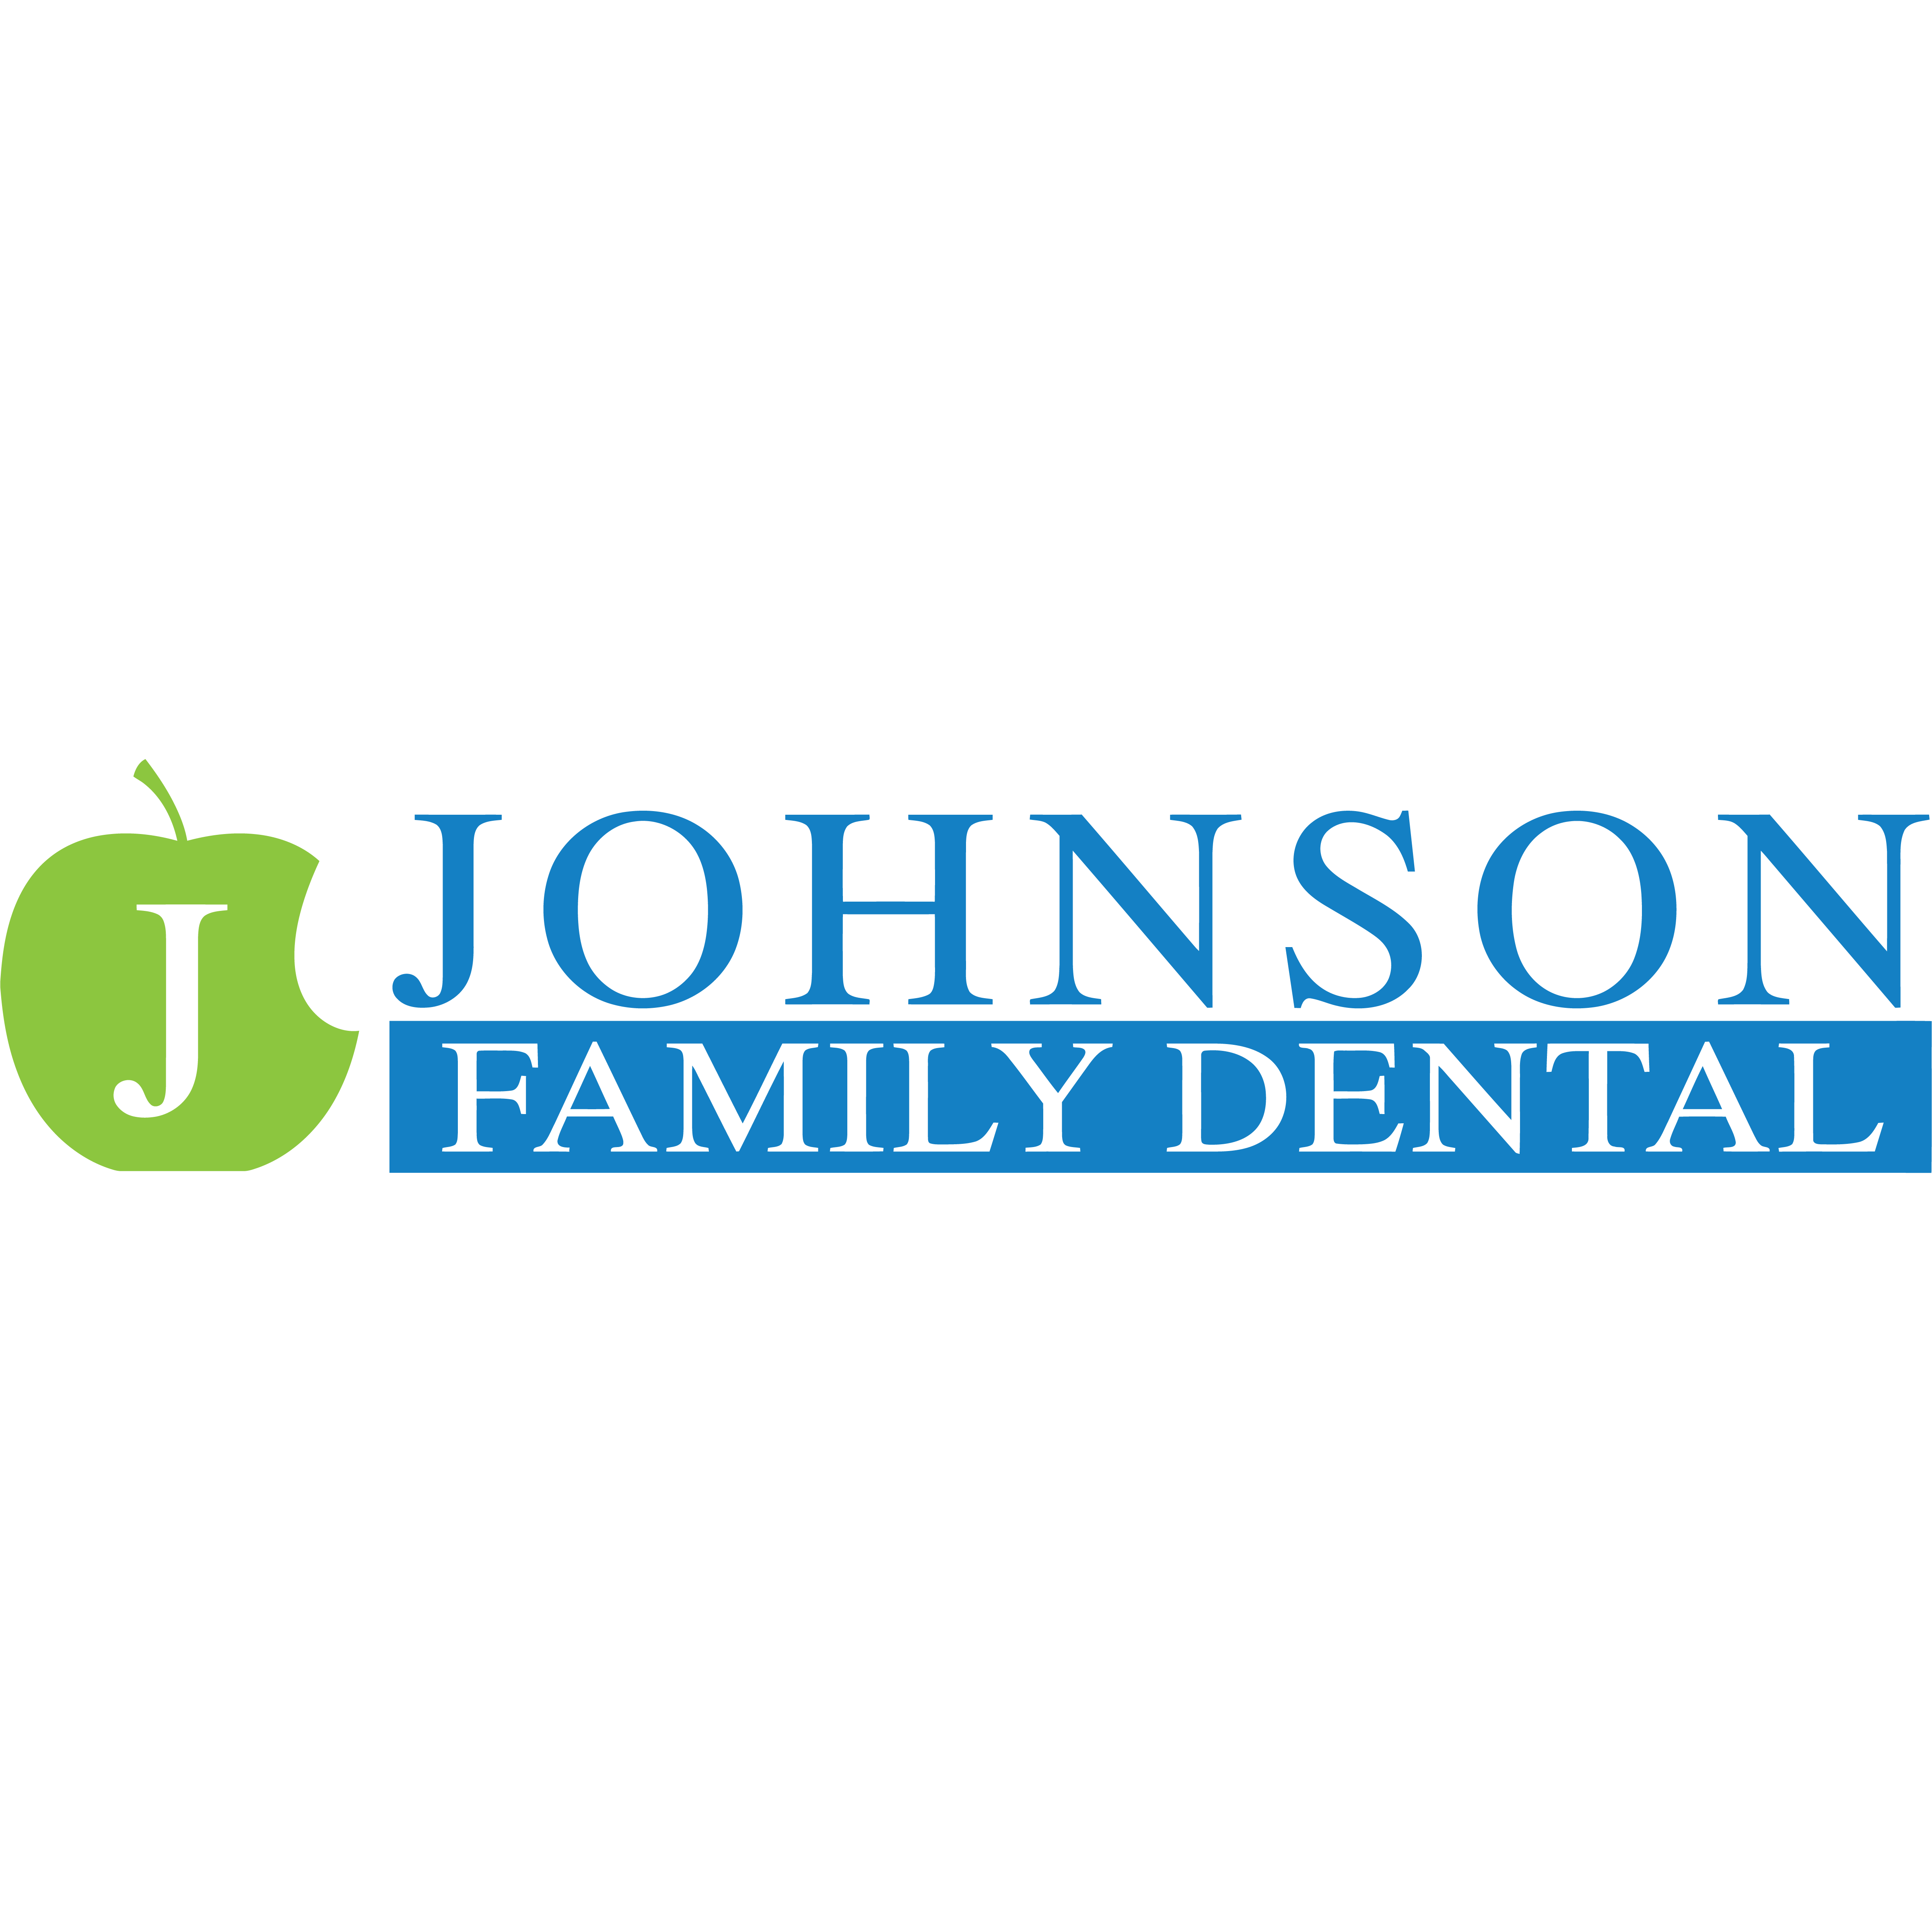 Johnson Family Dental - Camarillo - Camarillo, CA 93012 - (805)987-8782 | ShowMeLocal.com